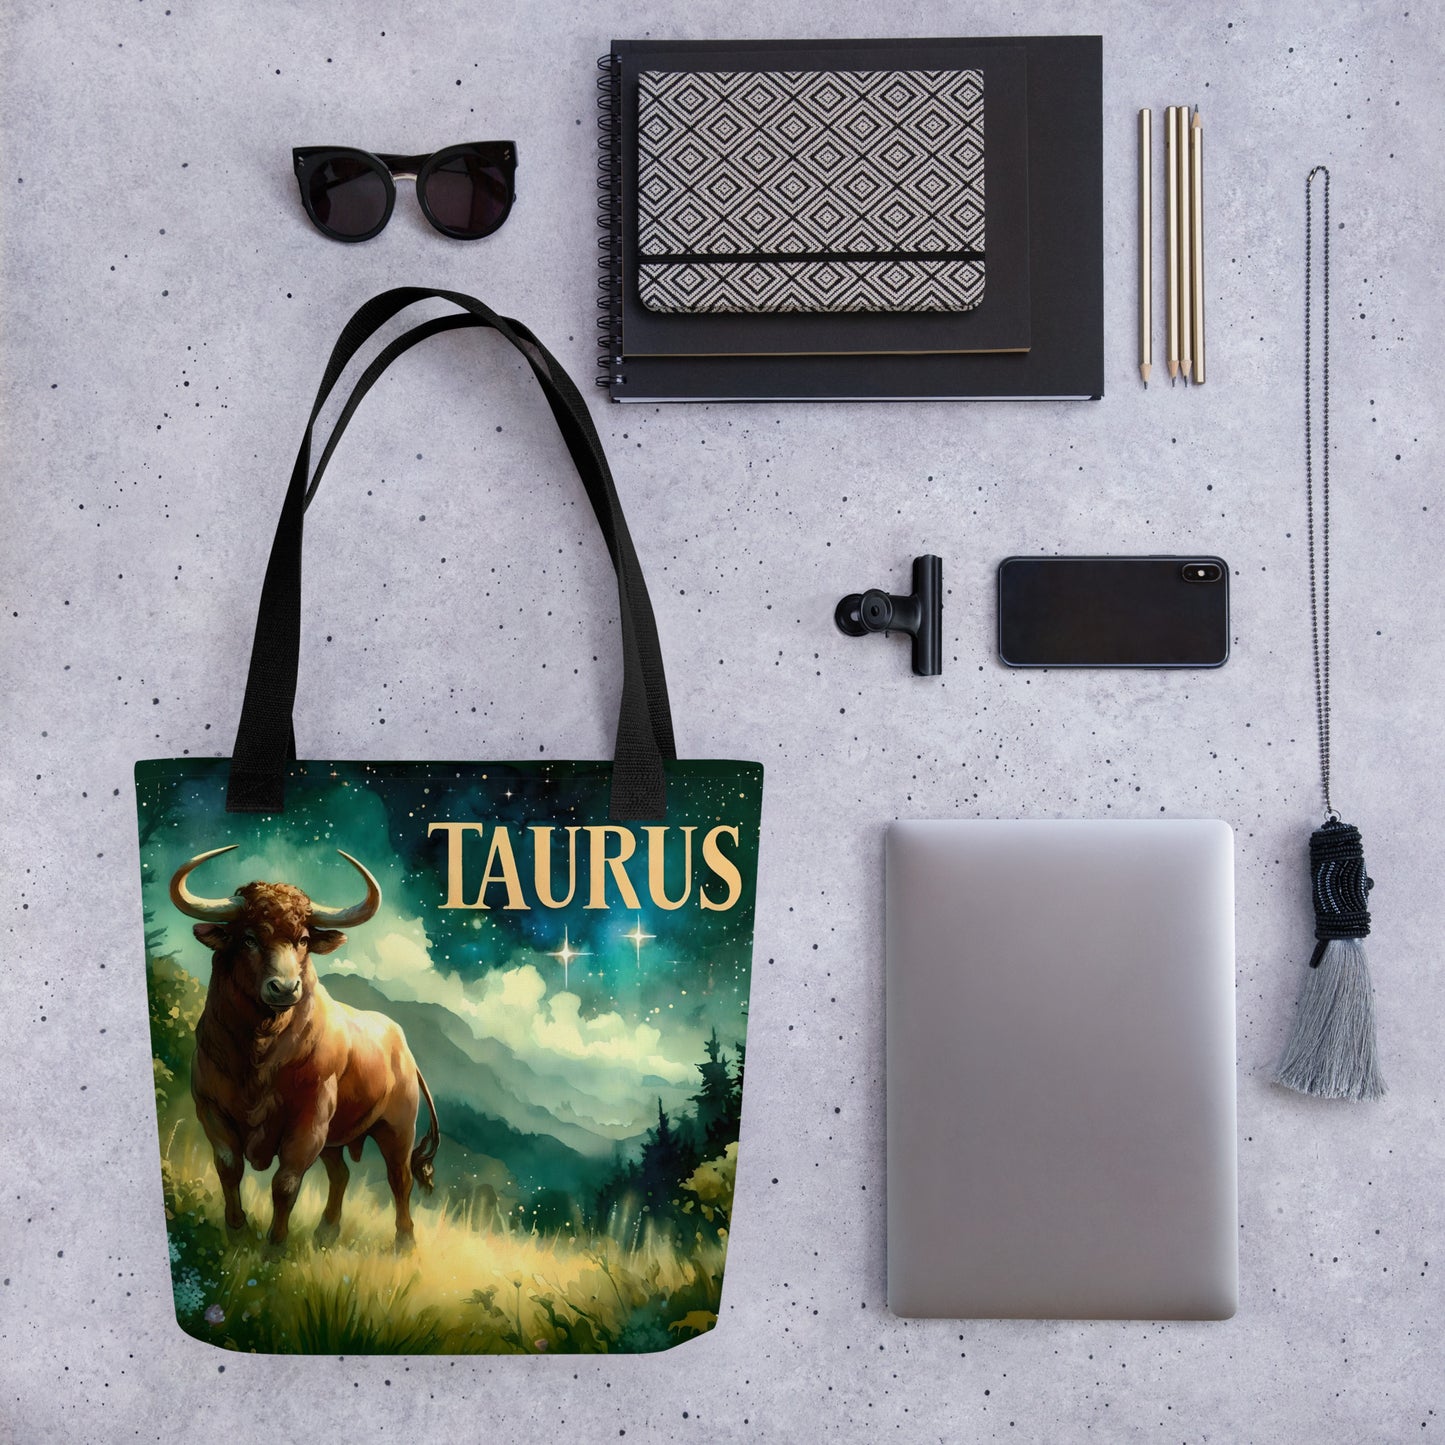 Taurus Horoscope Tote Bag